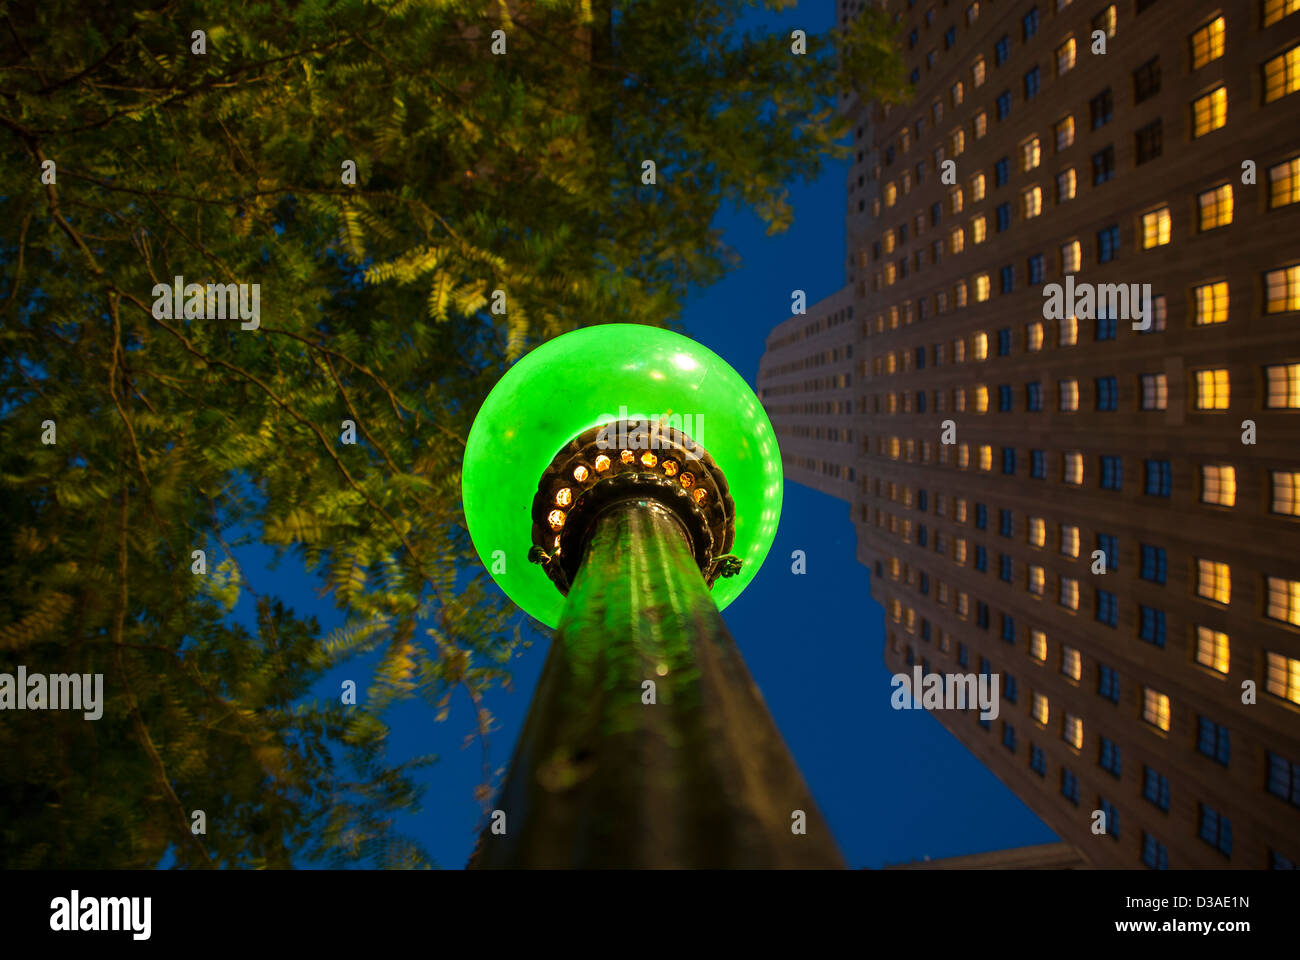 A NYC Subway station lantern, shot from below. Stock Photo